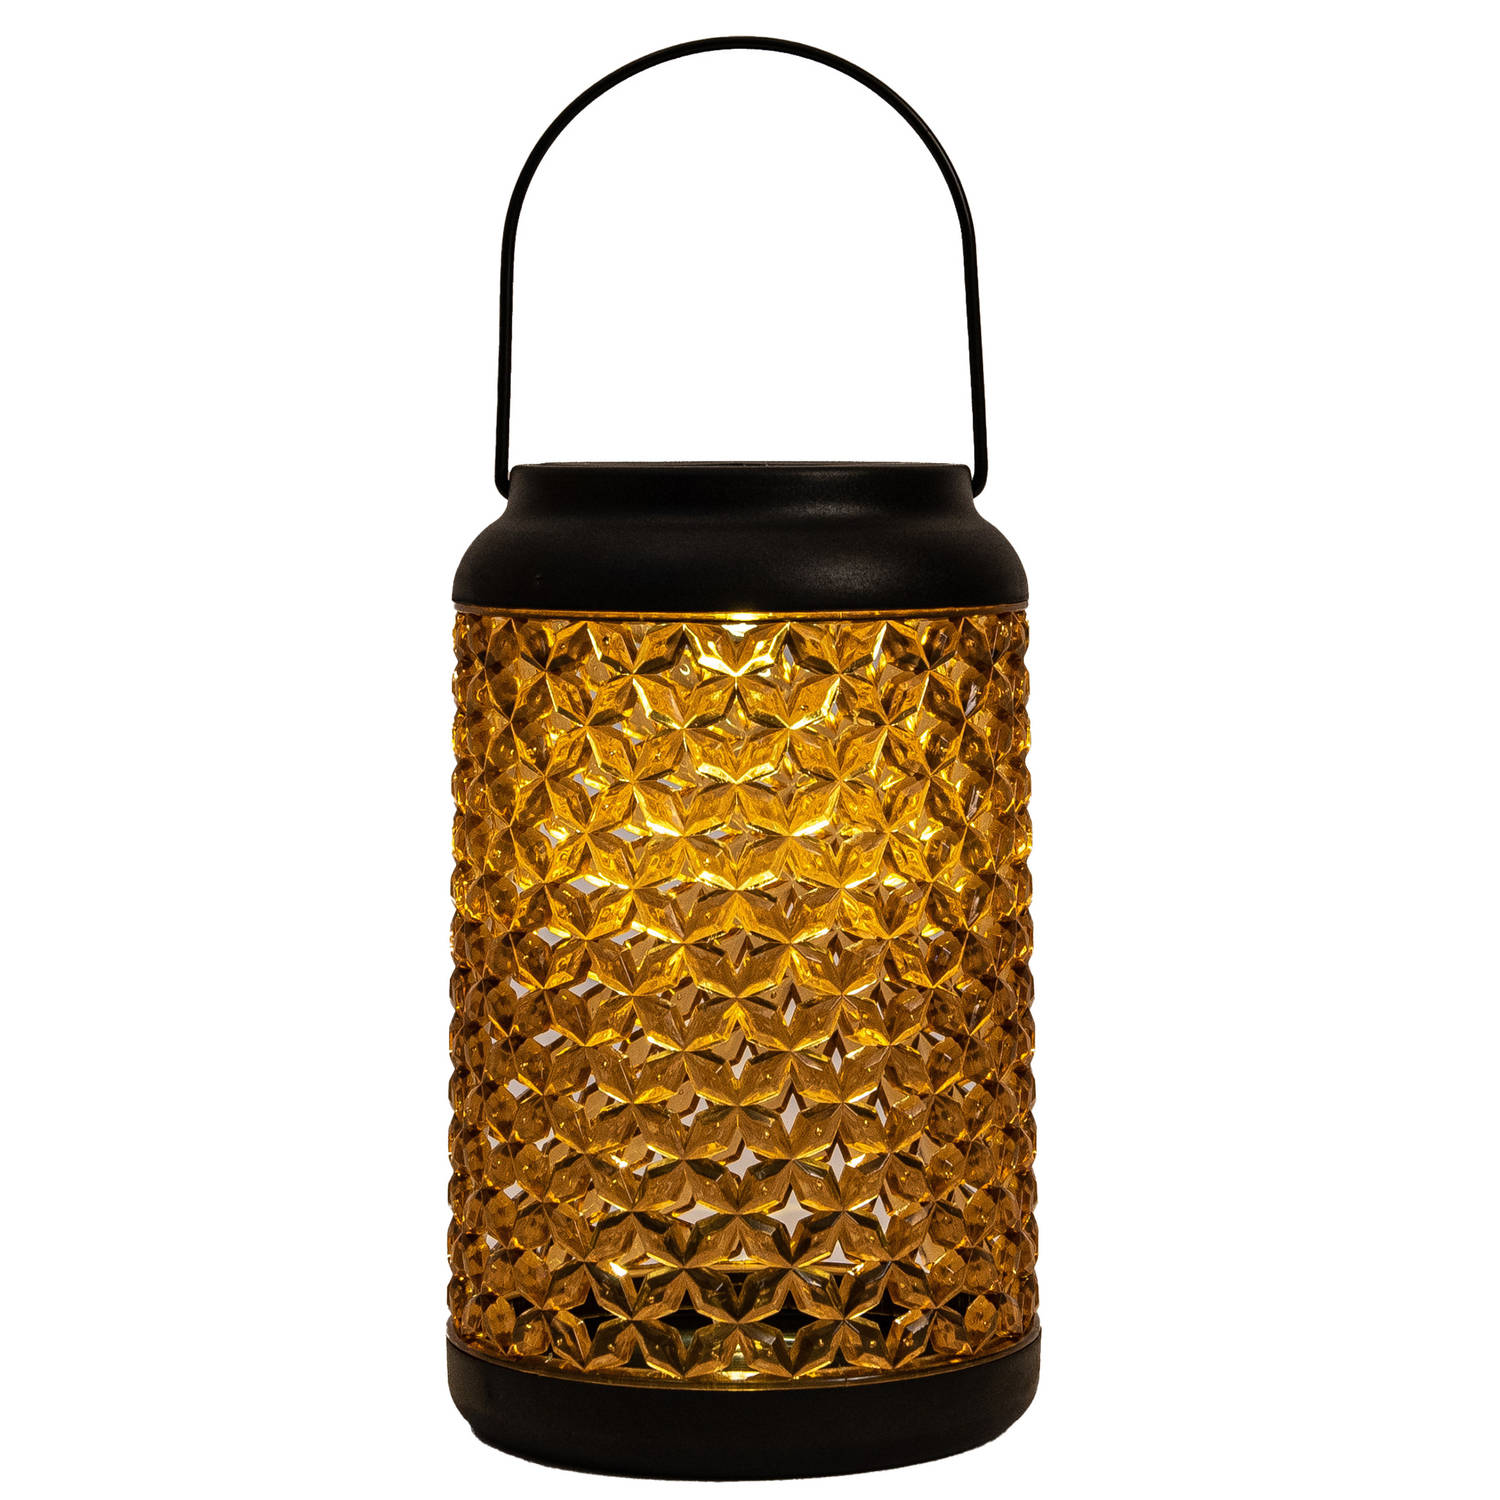 Anna's Collection Solar lantaarn voor buiten D12,5 x H20 cm amber glas tafellamp Lantaarns